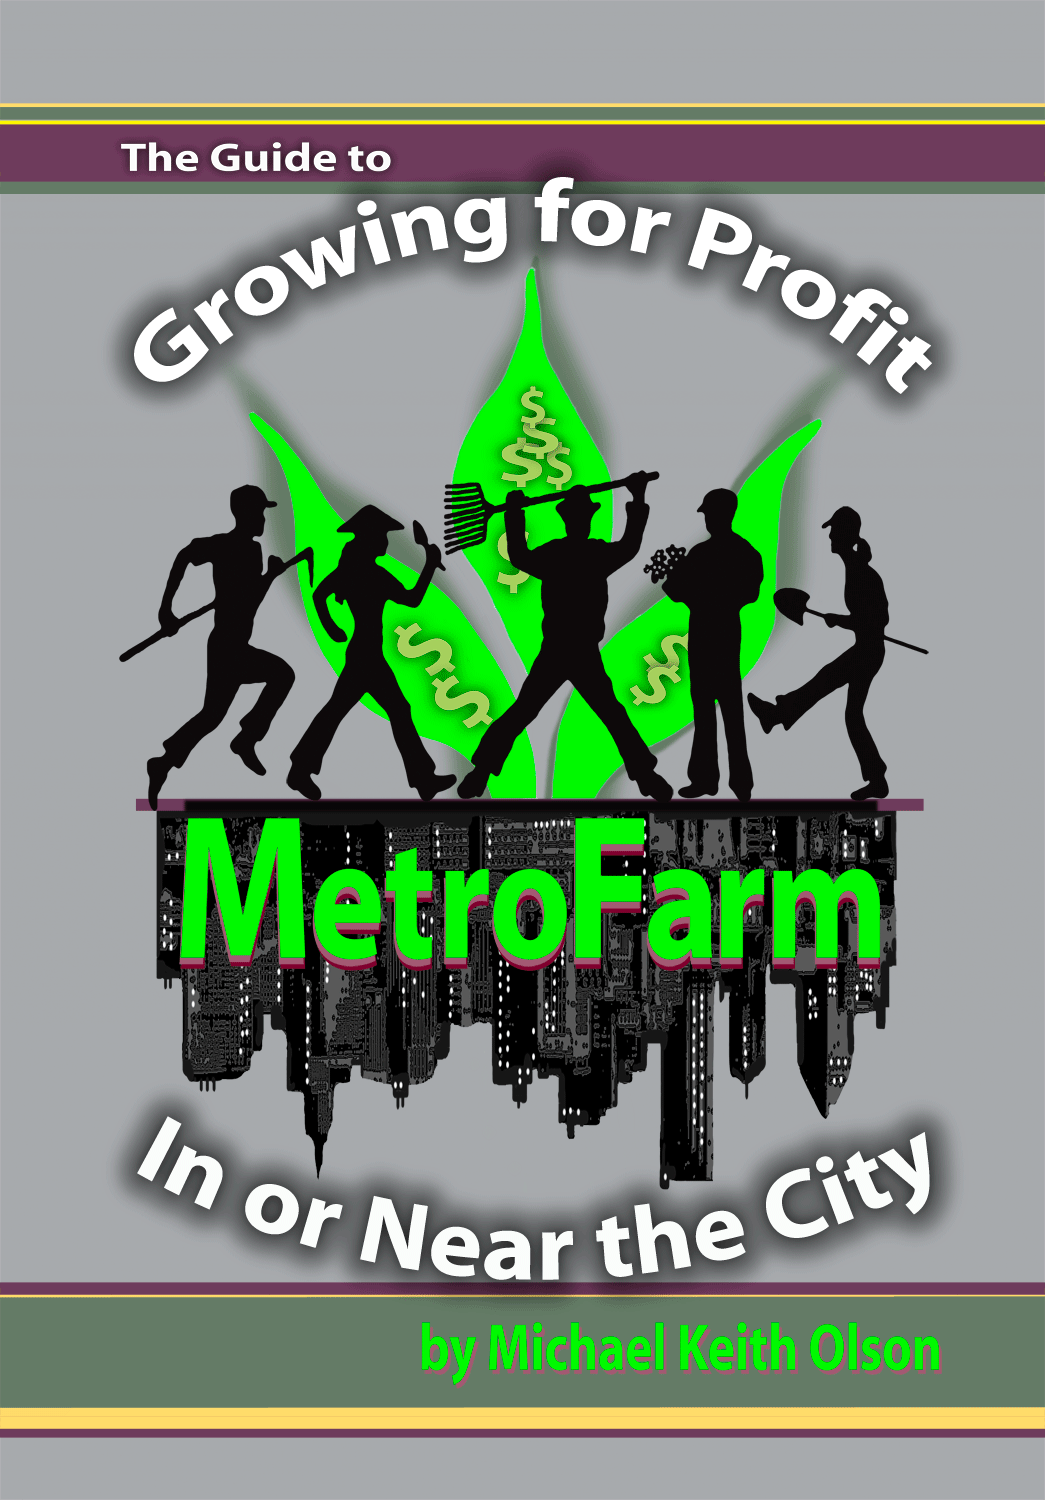 Urban Farming - How to Grow for Profit In or Near the City Michael Olson: Author of MetroFarm